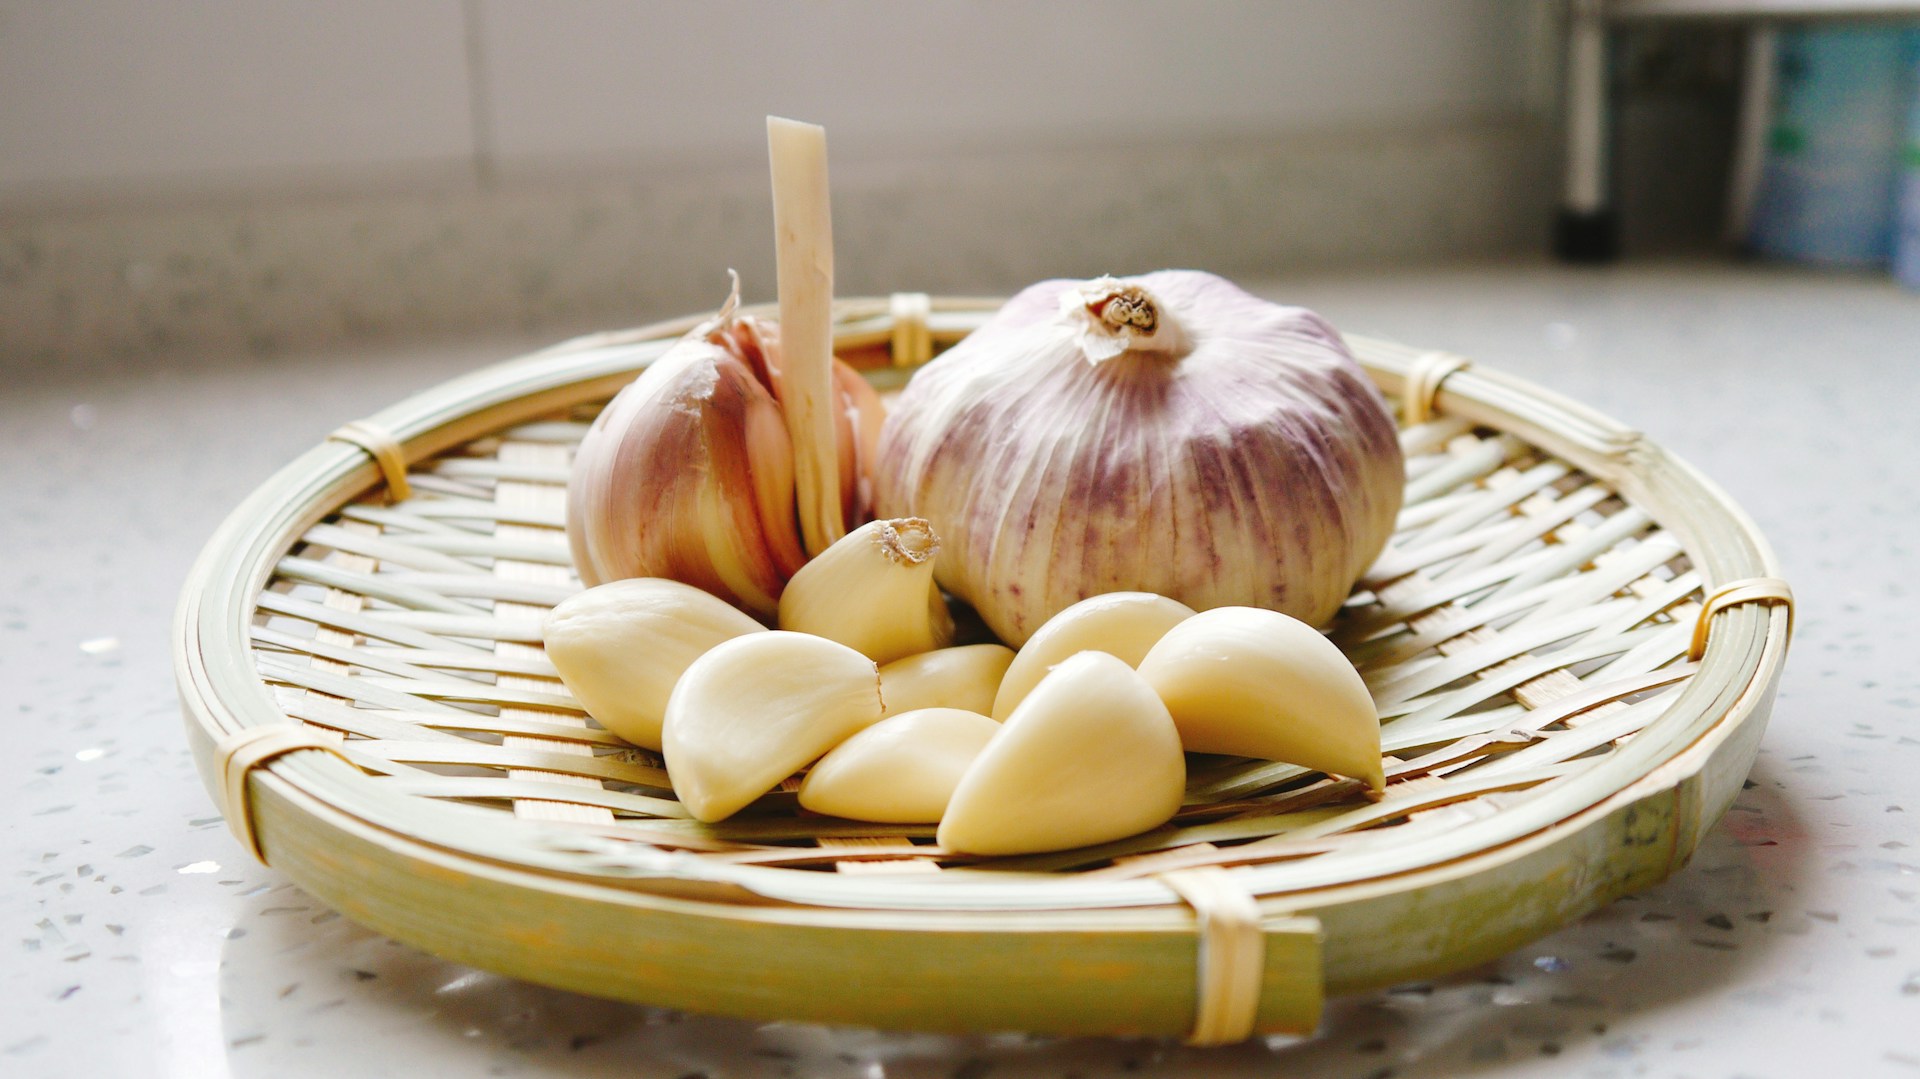 Garlic cloves on a tray